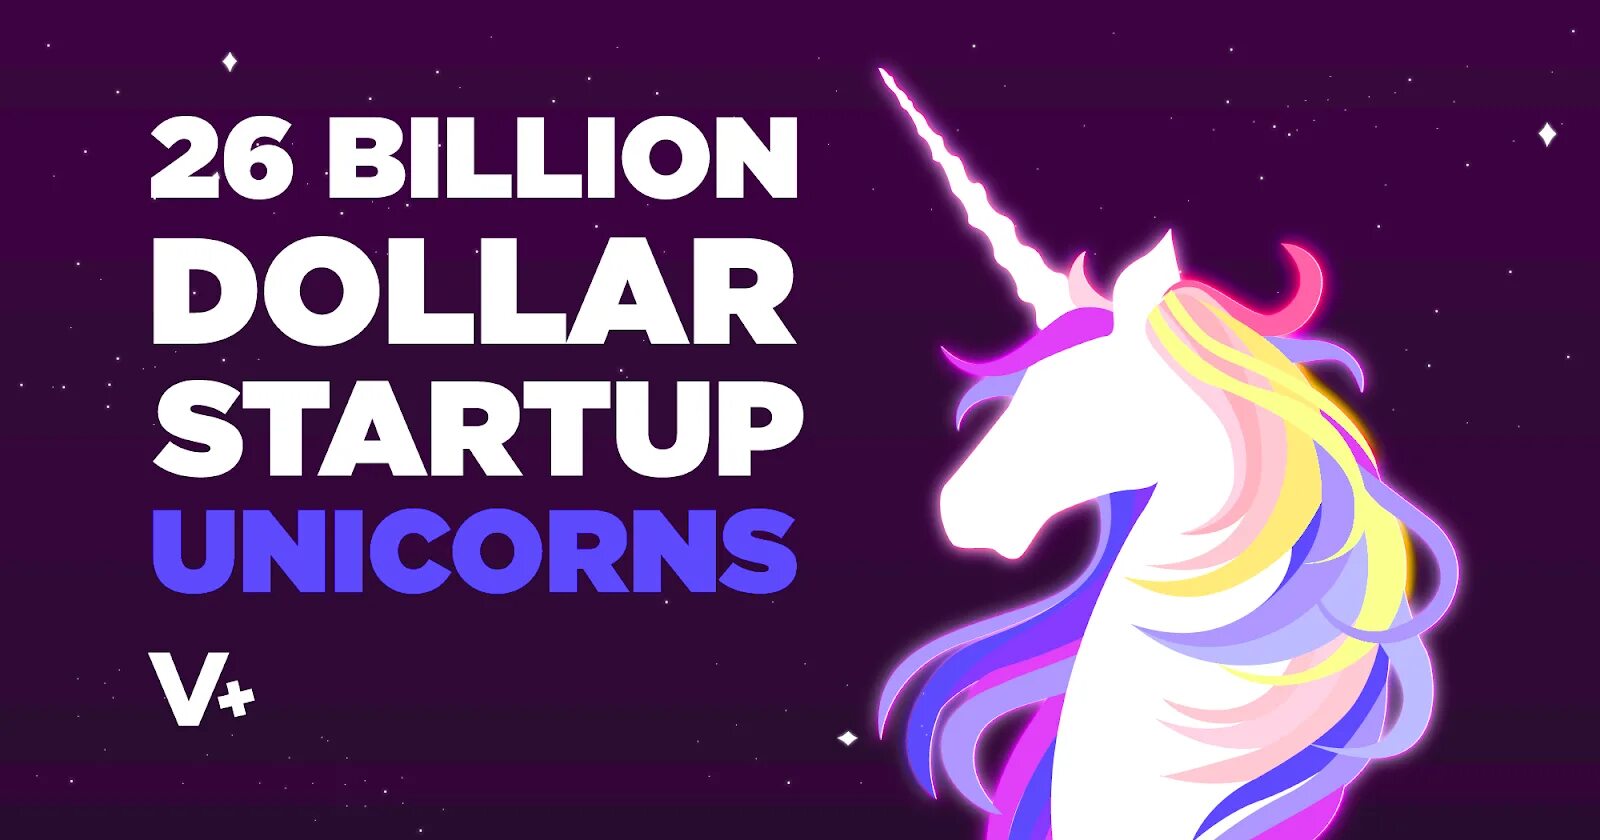 Best billion. Стартапы Единороги. Единорог Startup. Unicorn стартапы. Единорог в бизнесе.